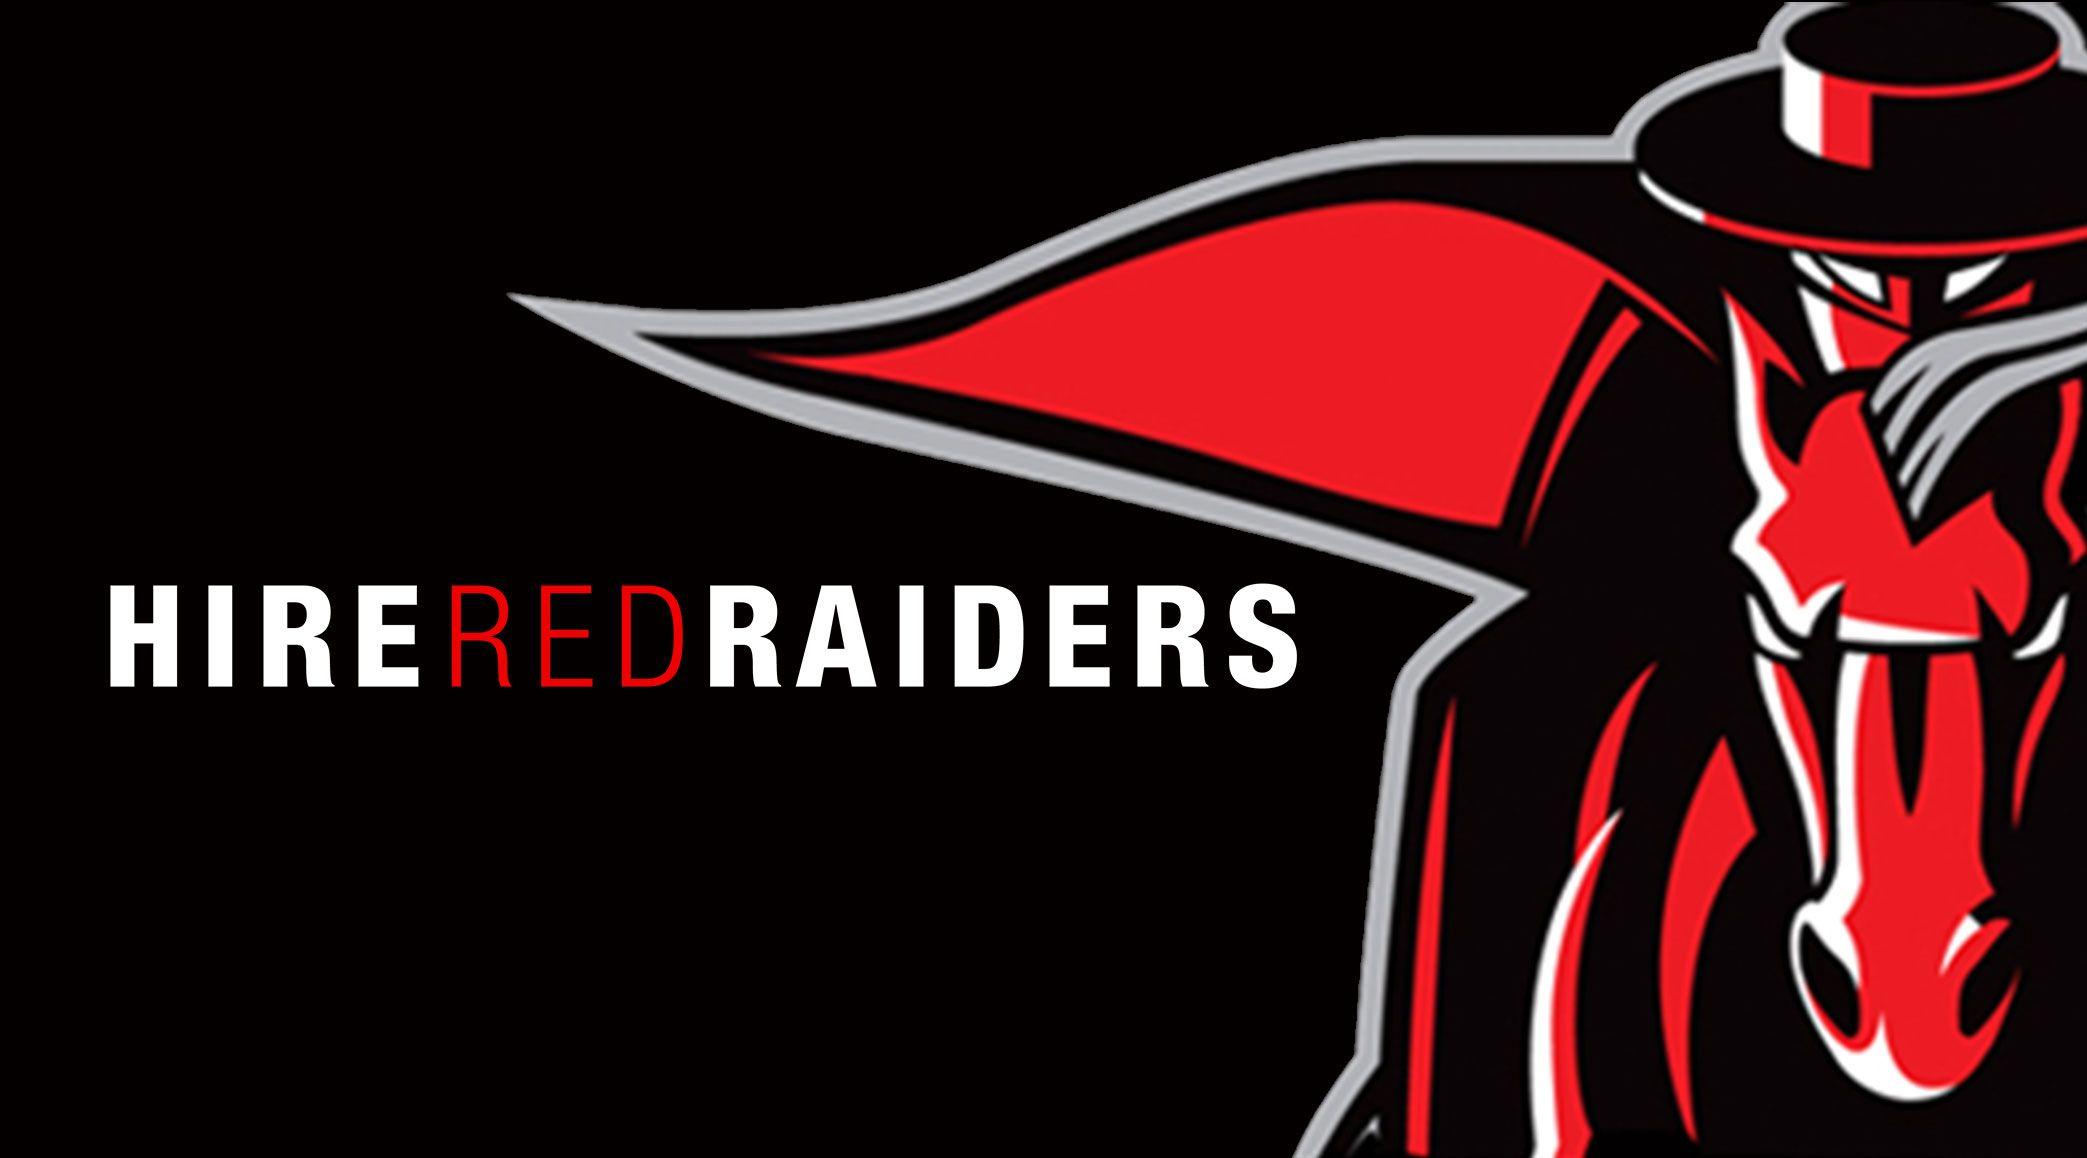 Red Raiders Logo - Hire Red Raiders | Undergraduate Students | University Career Center ...